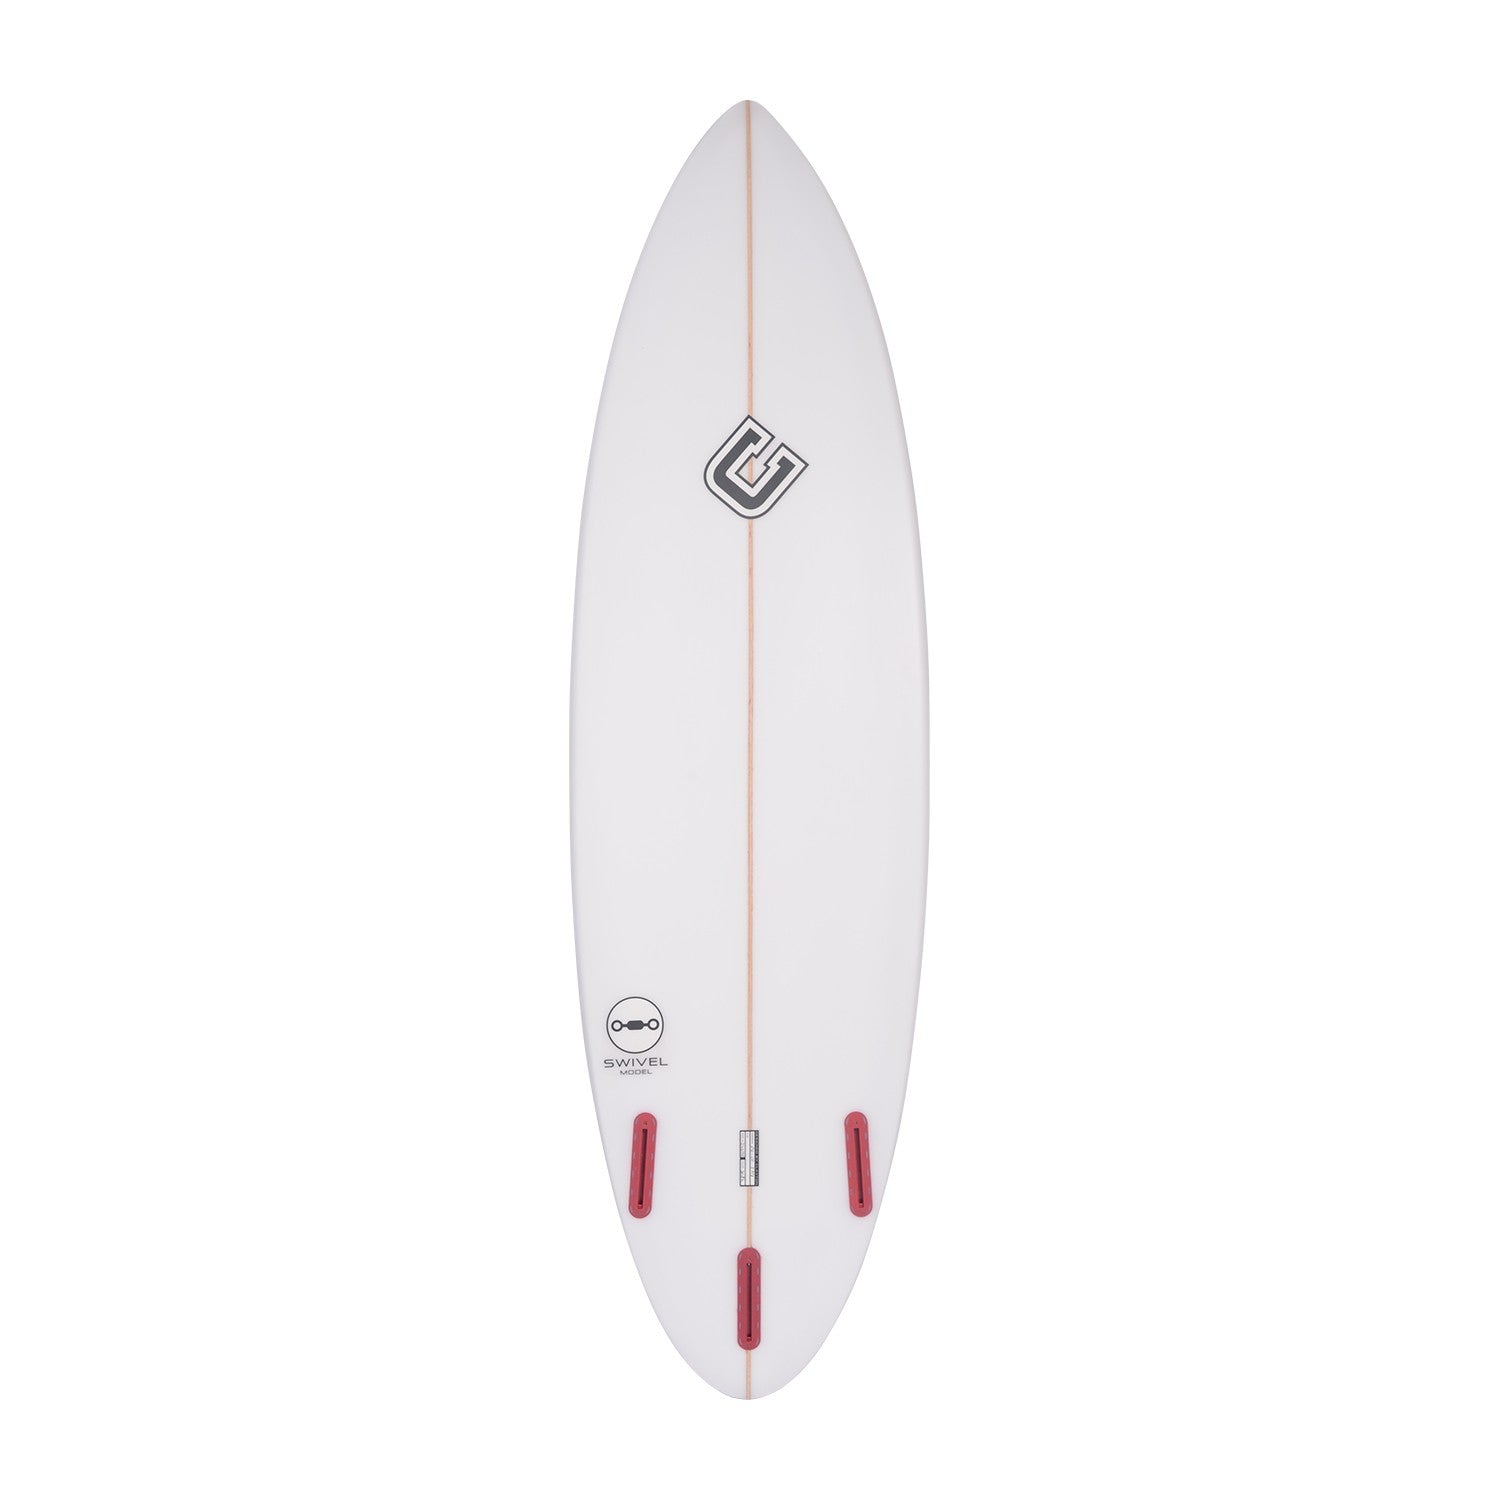 CLAYTON Surfboards - Swivel (PU) Futures - 5'10